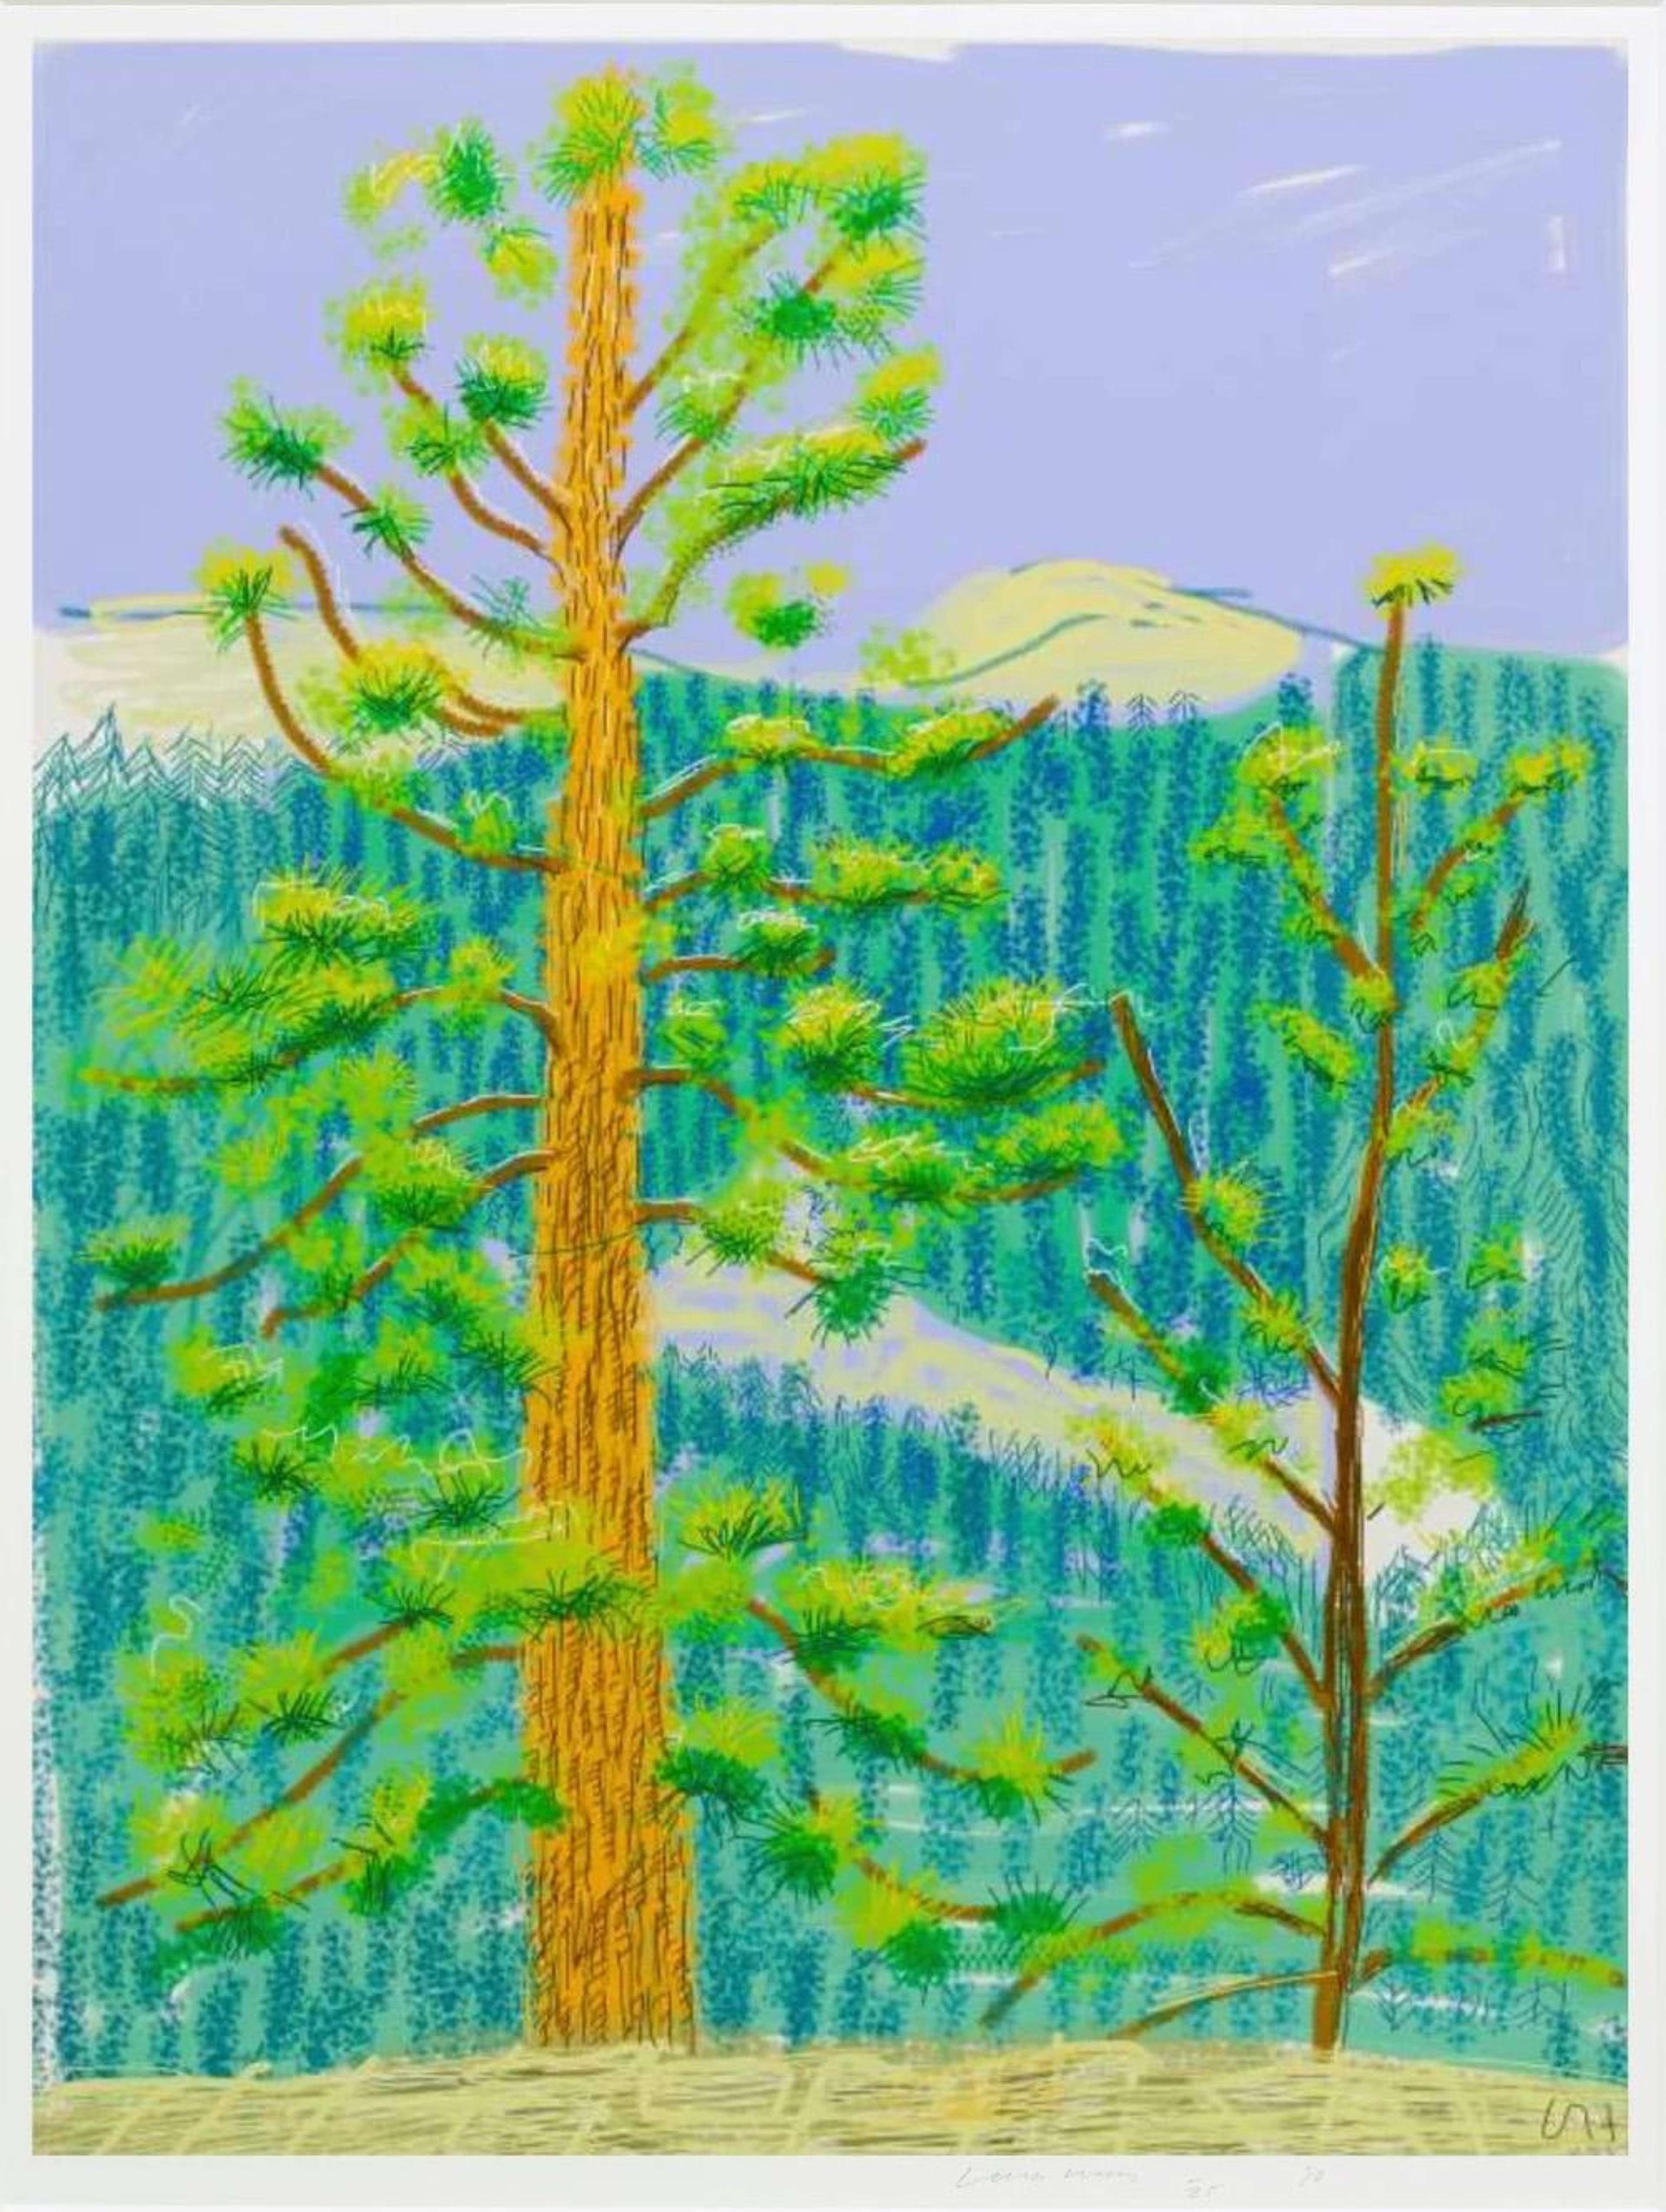 The Yosemite Suite 8 - Signed Print by David Hockney 2010 - MyArtBroker